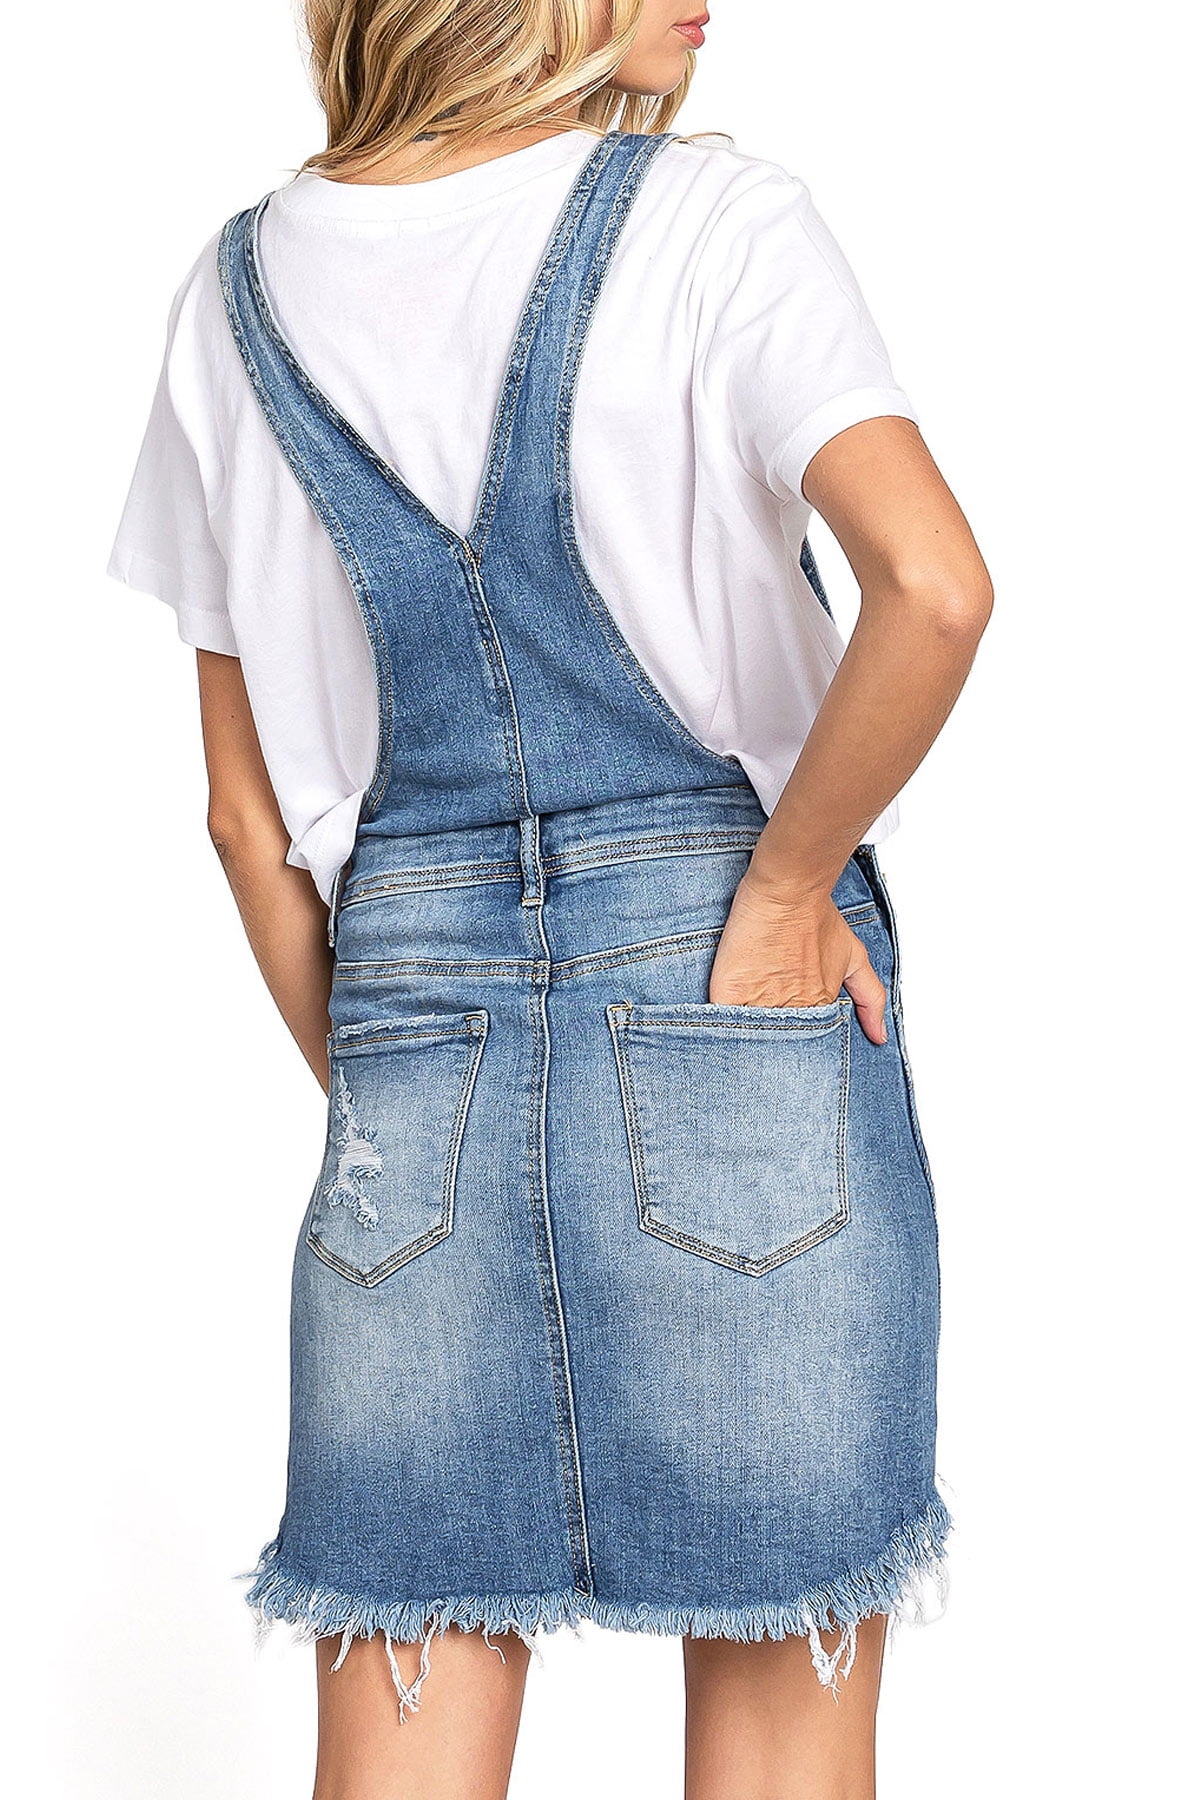 Lilgiuy Summer Sales Women's Denim Bib Overall Denim Pinafore Dress Button Denim  Dress with Suspenders Pinafore Dress Skirt Jeans Jumpers - Walmart.com